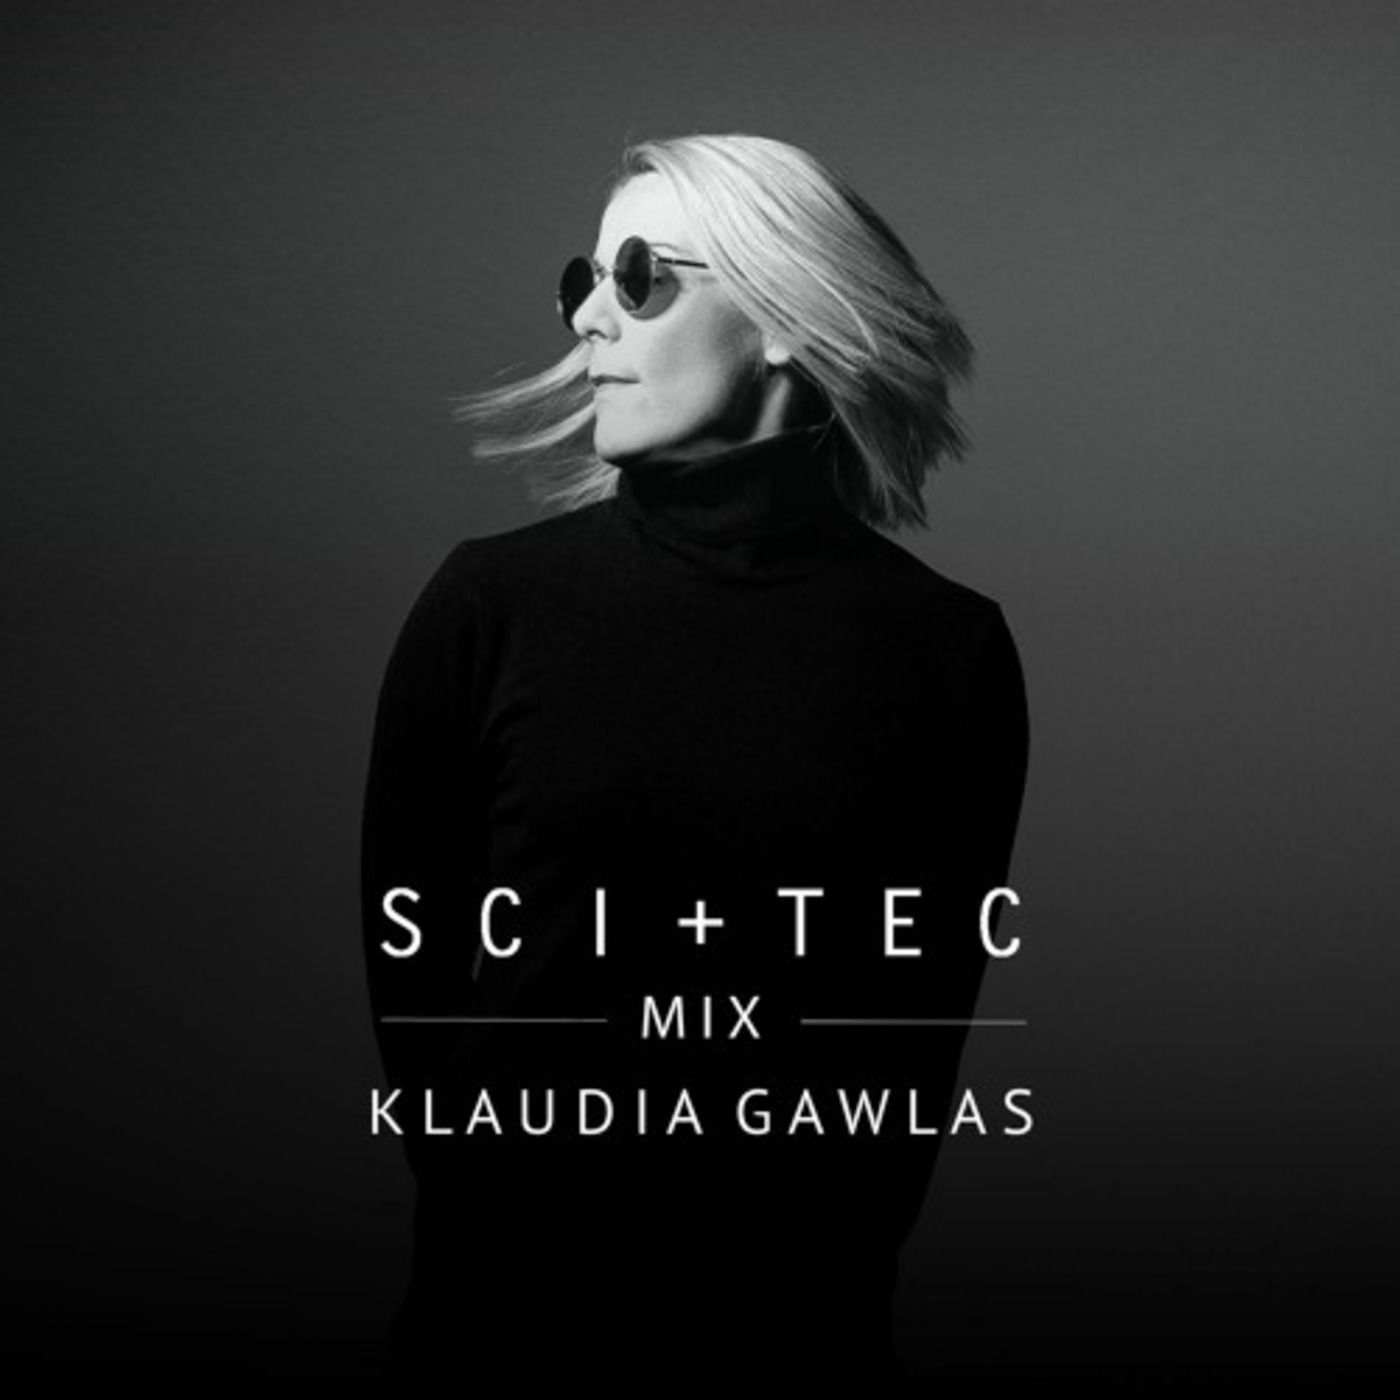 civile bluse bidragyder Klaudia Gawlas 2021 SCI+TEC Mix